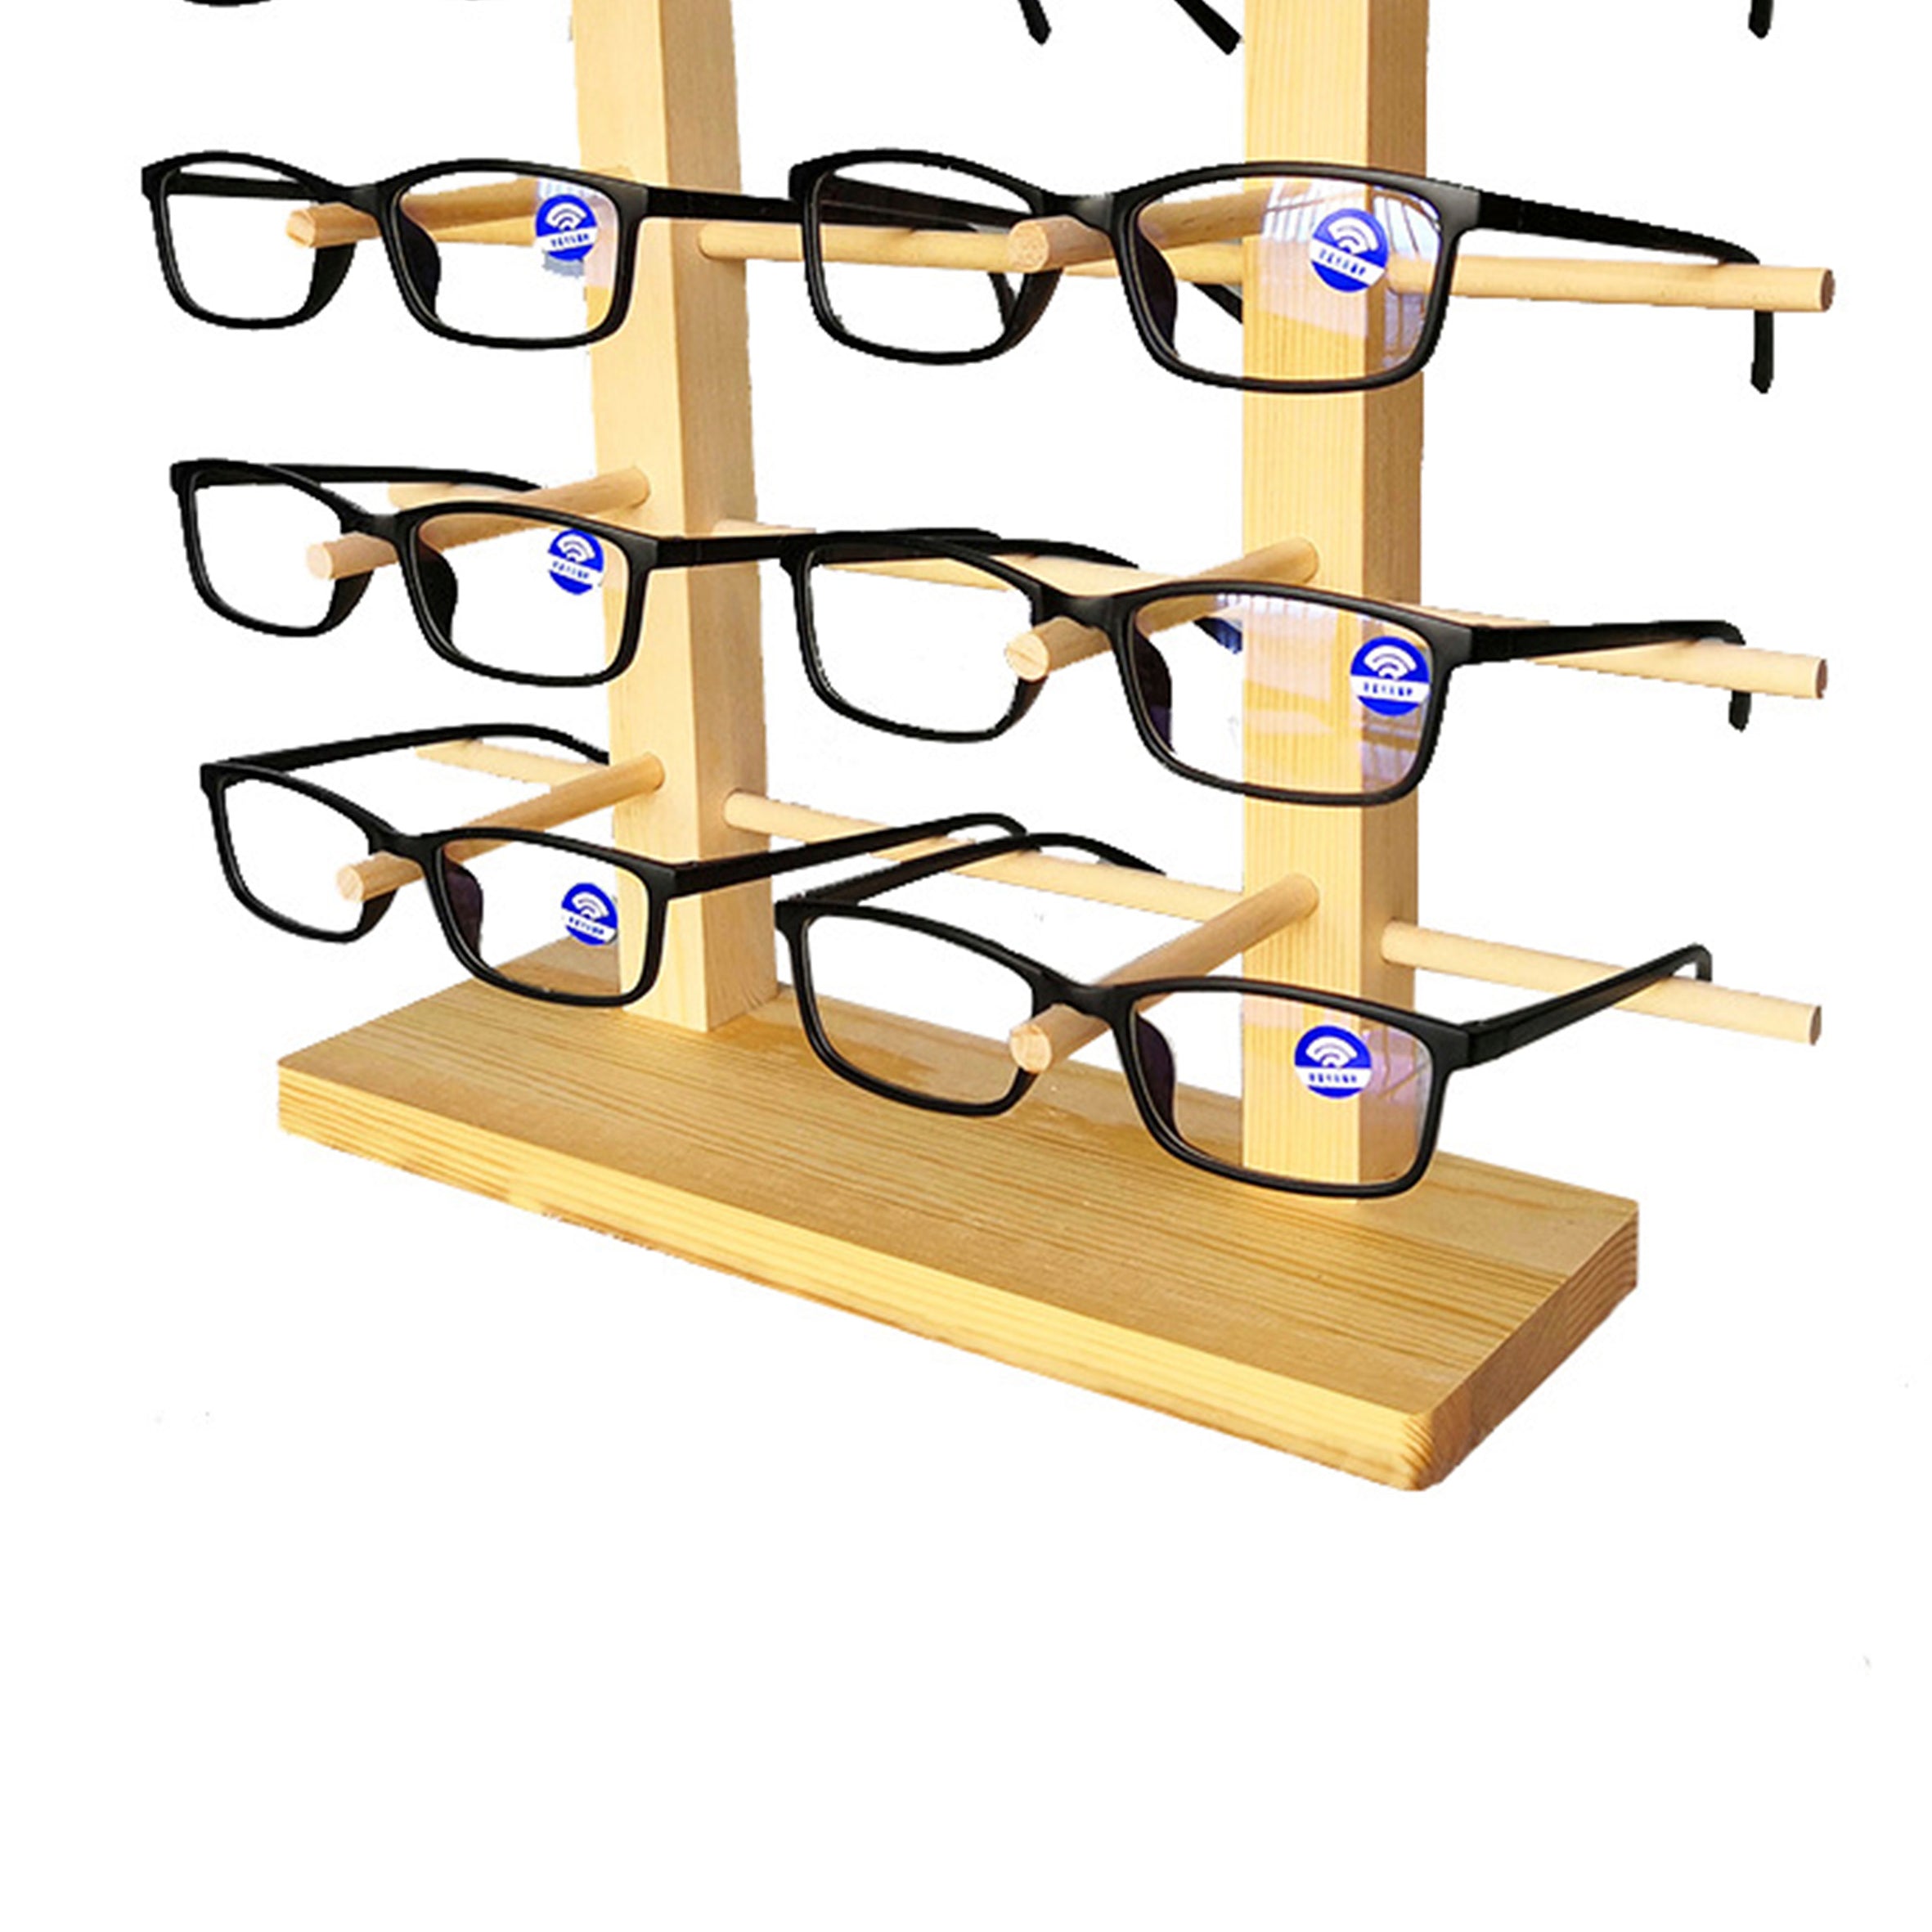 8 Grid Wooden Glasses Display W1419